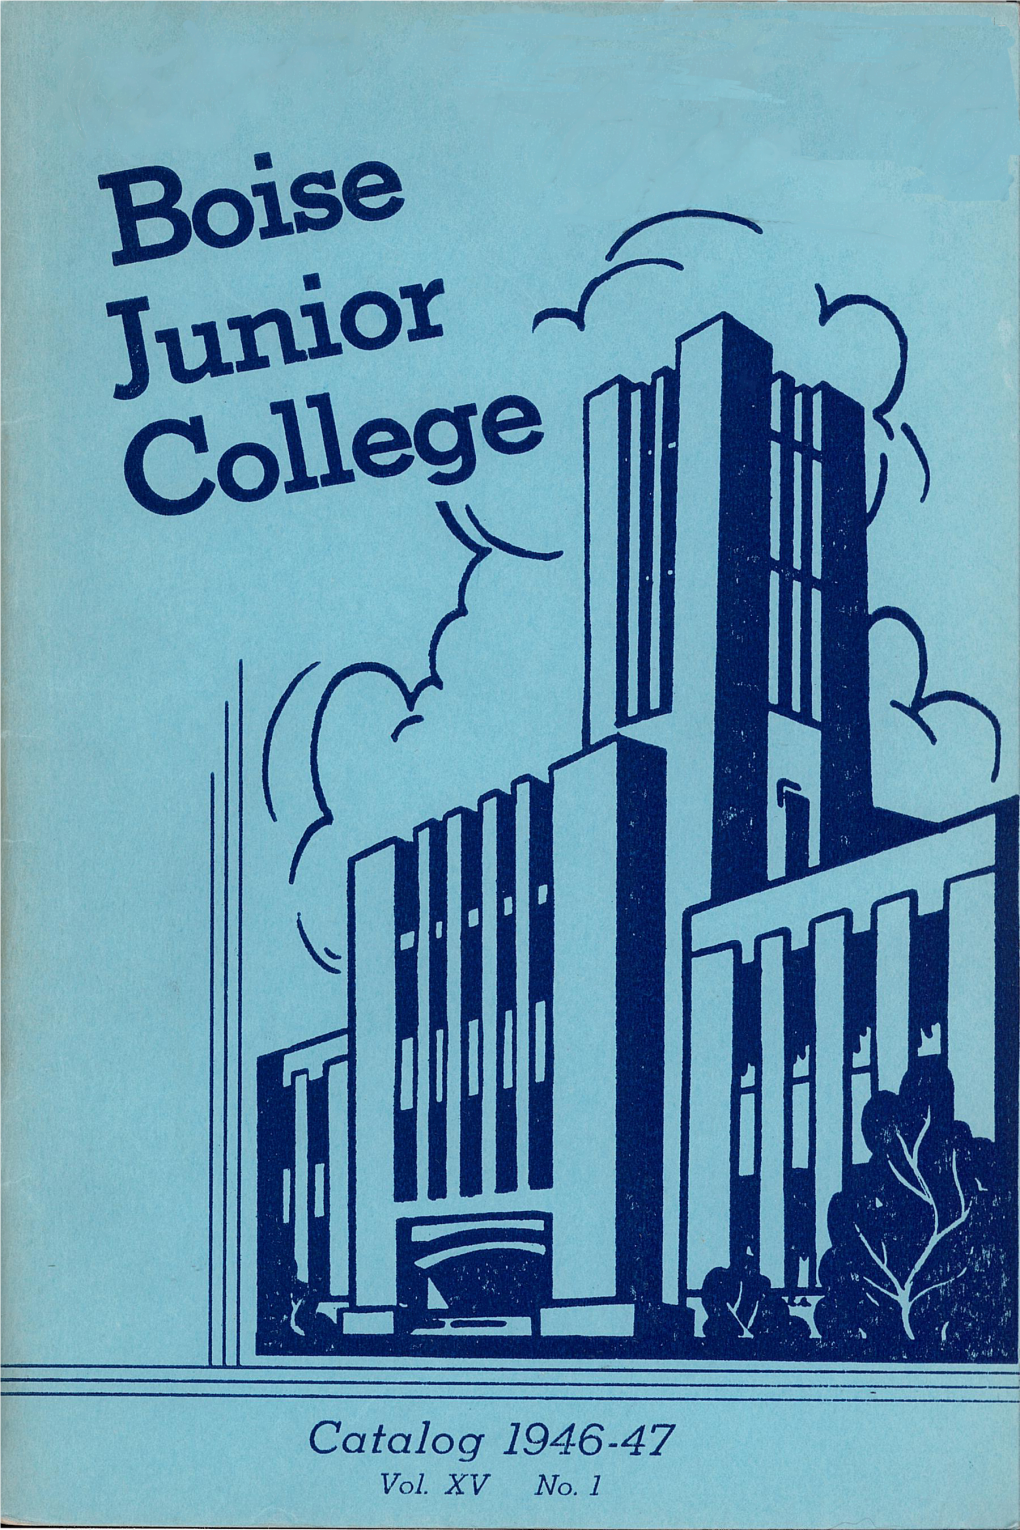 Catalog: 1946-1947